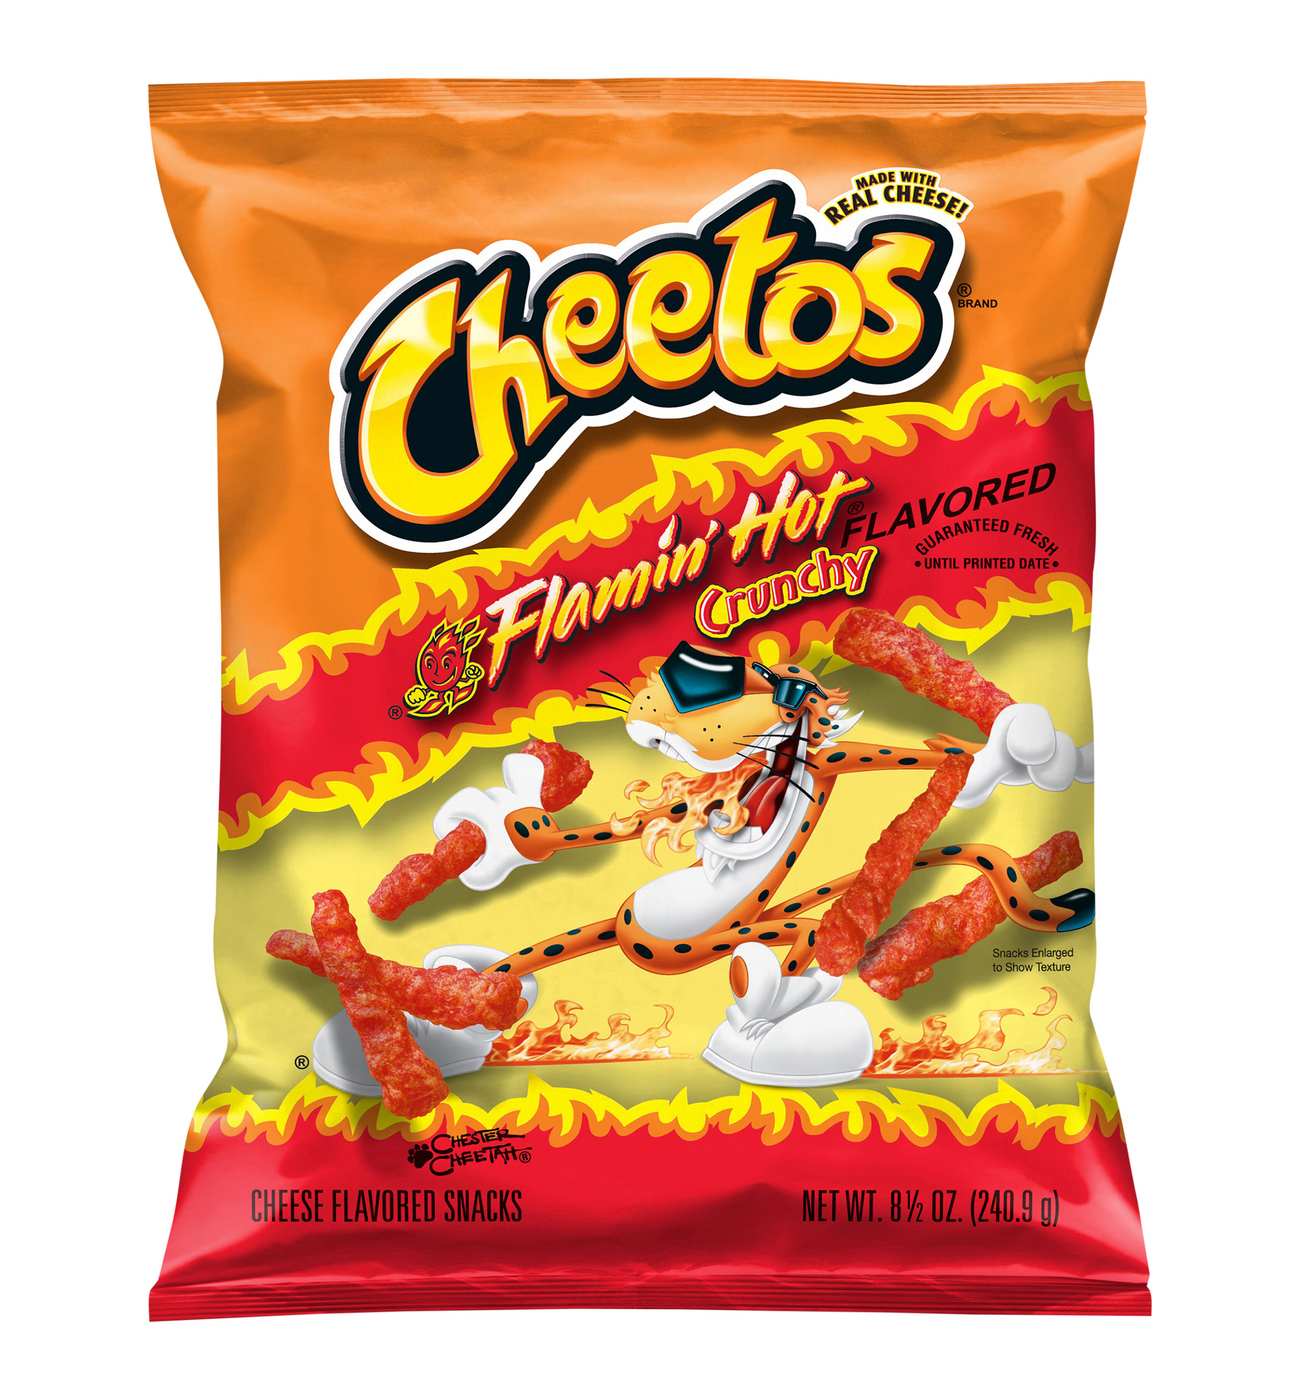 Cheetos Crunchy Flamin' Hot Cheese Snacks